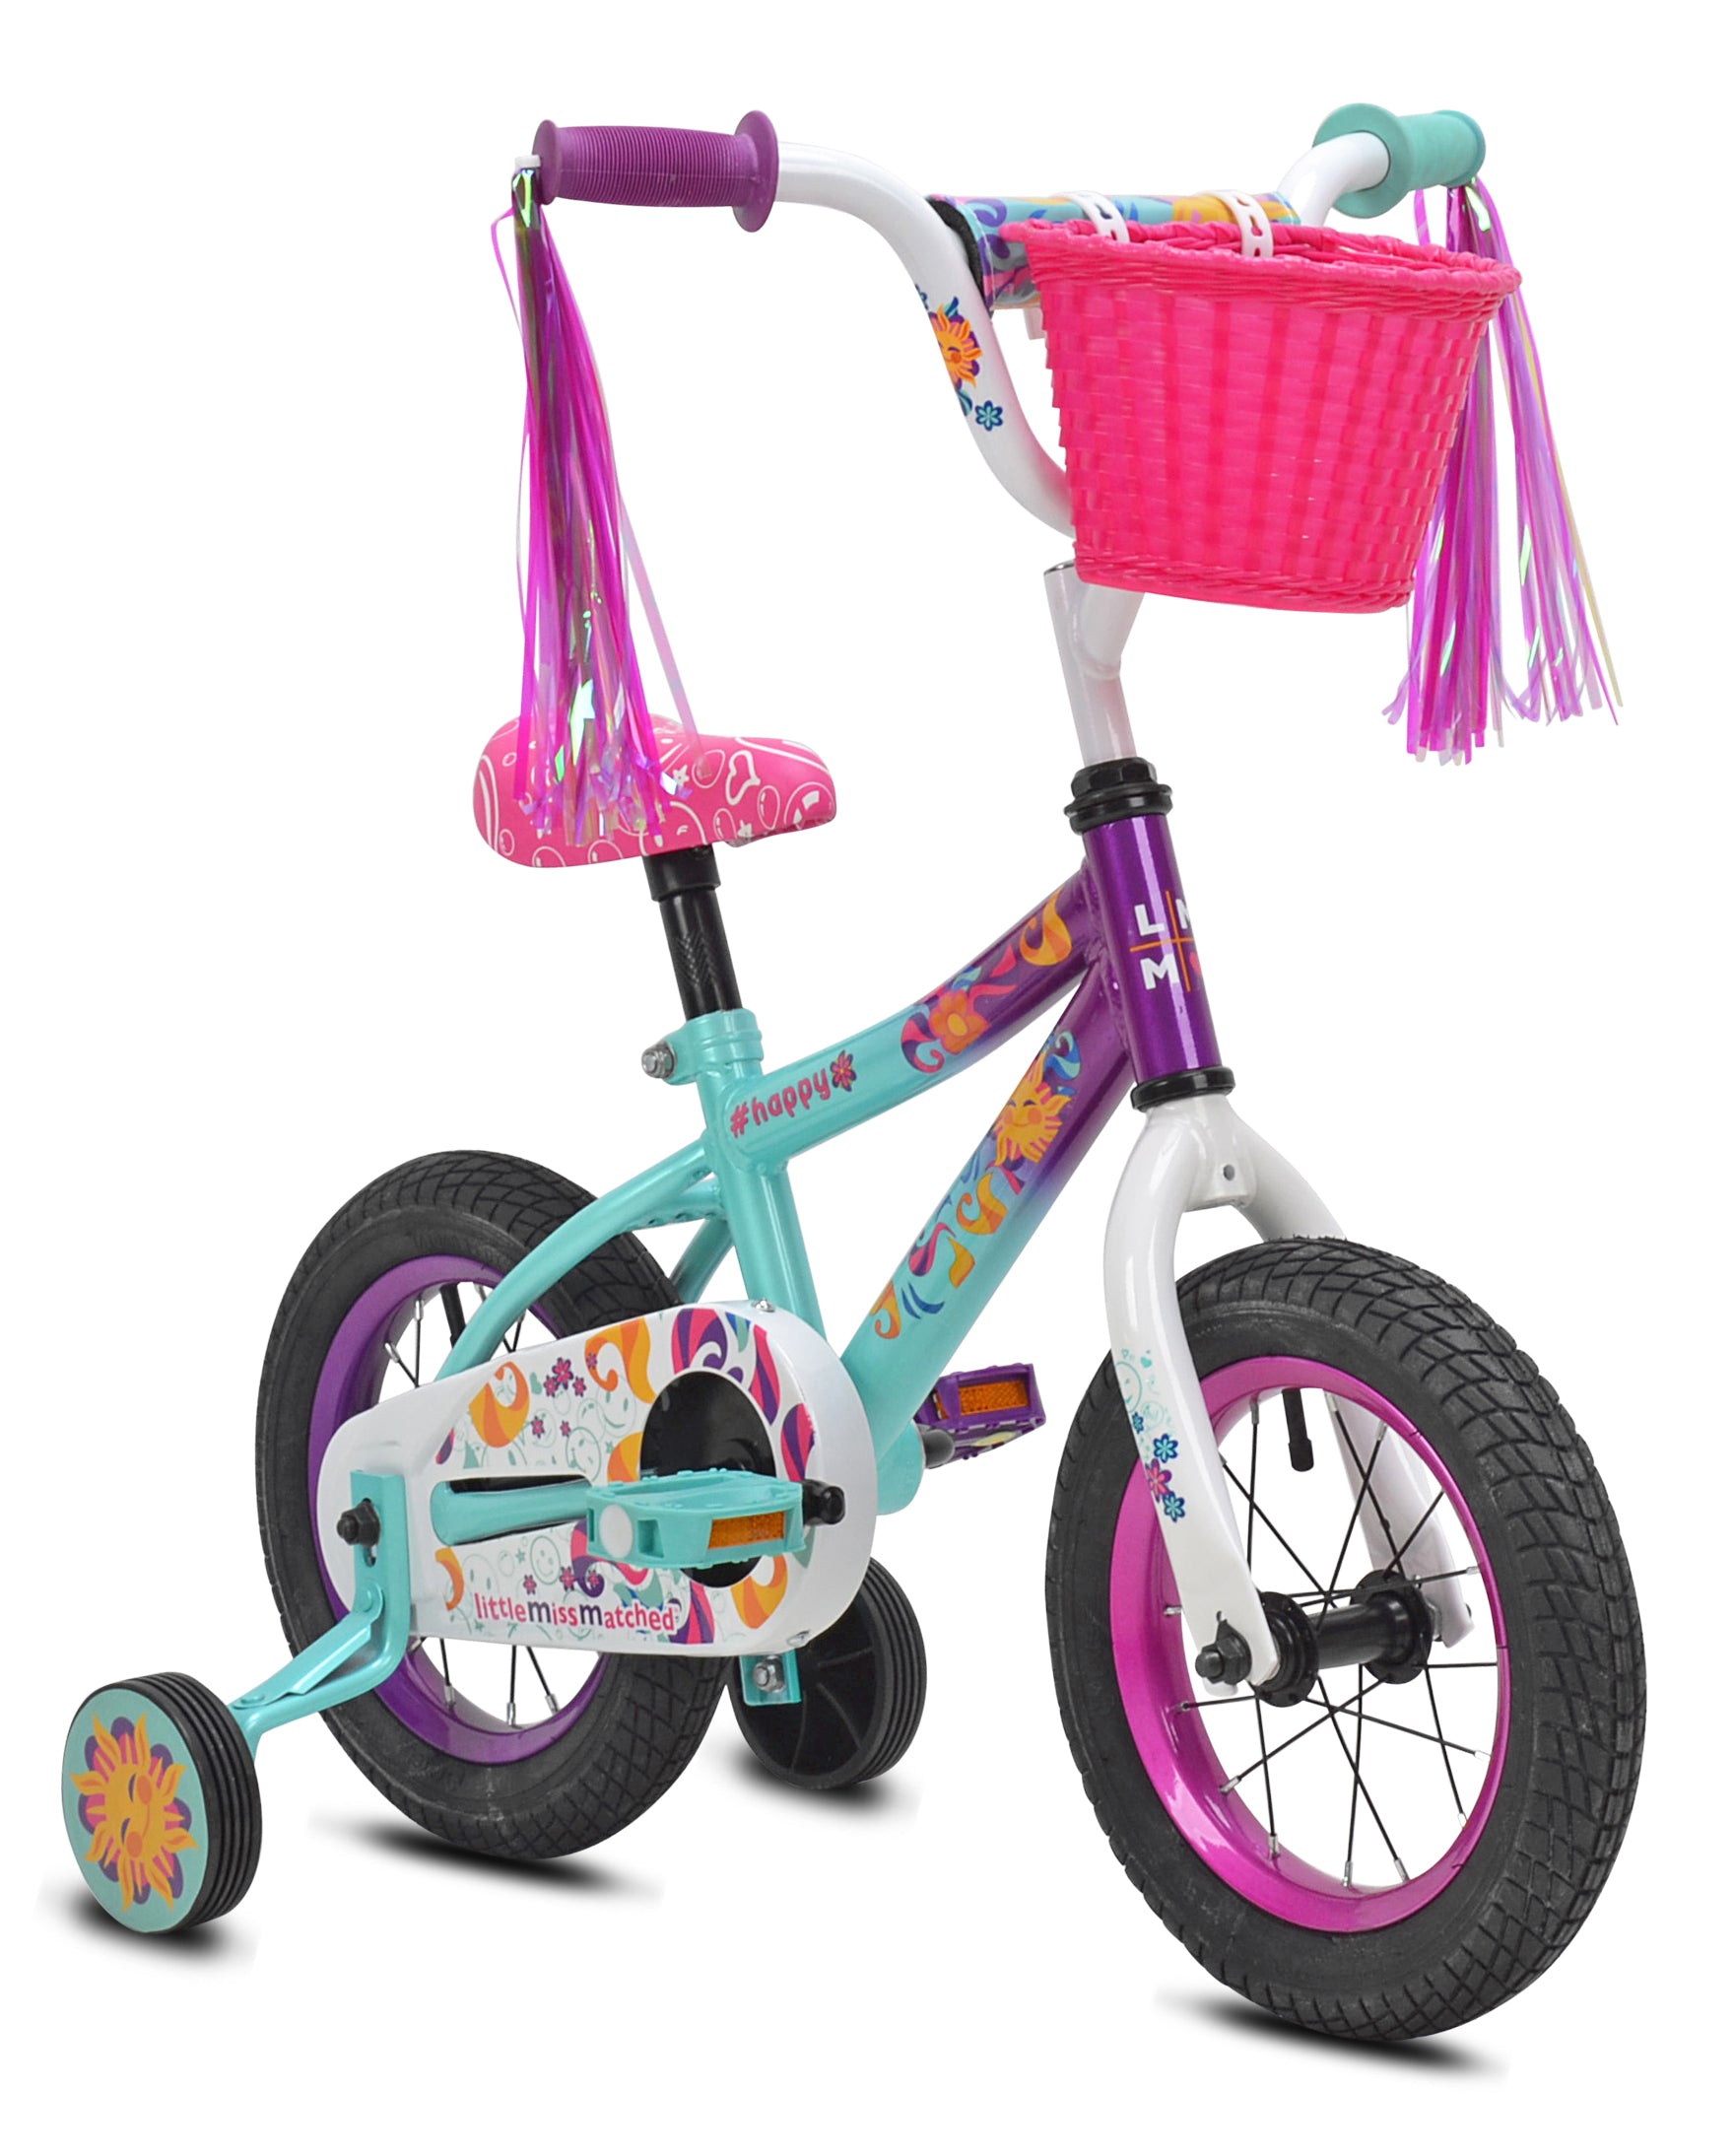 12" Little Miss Matched Bike